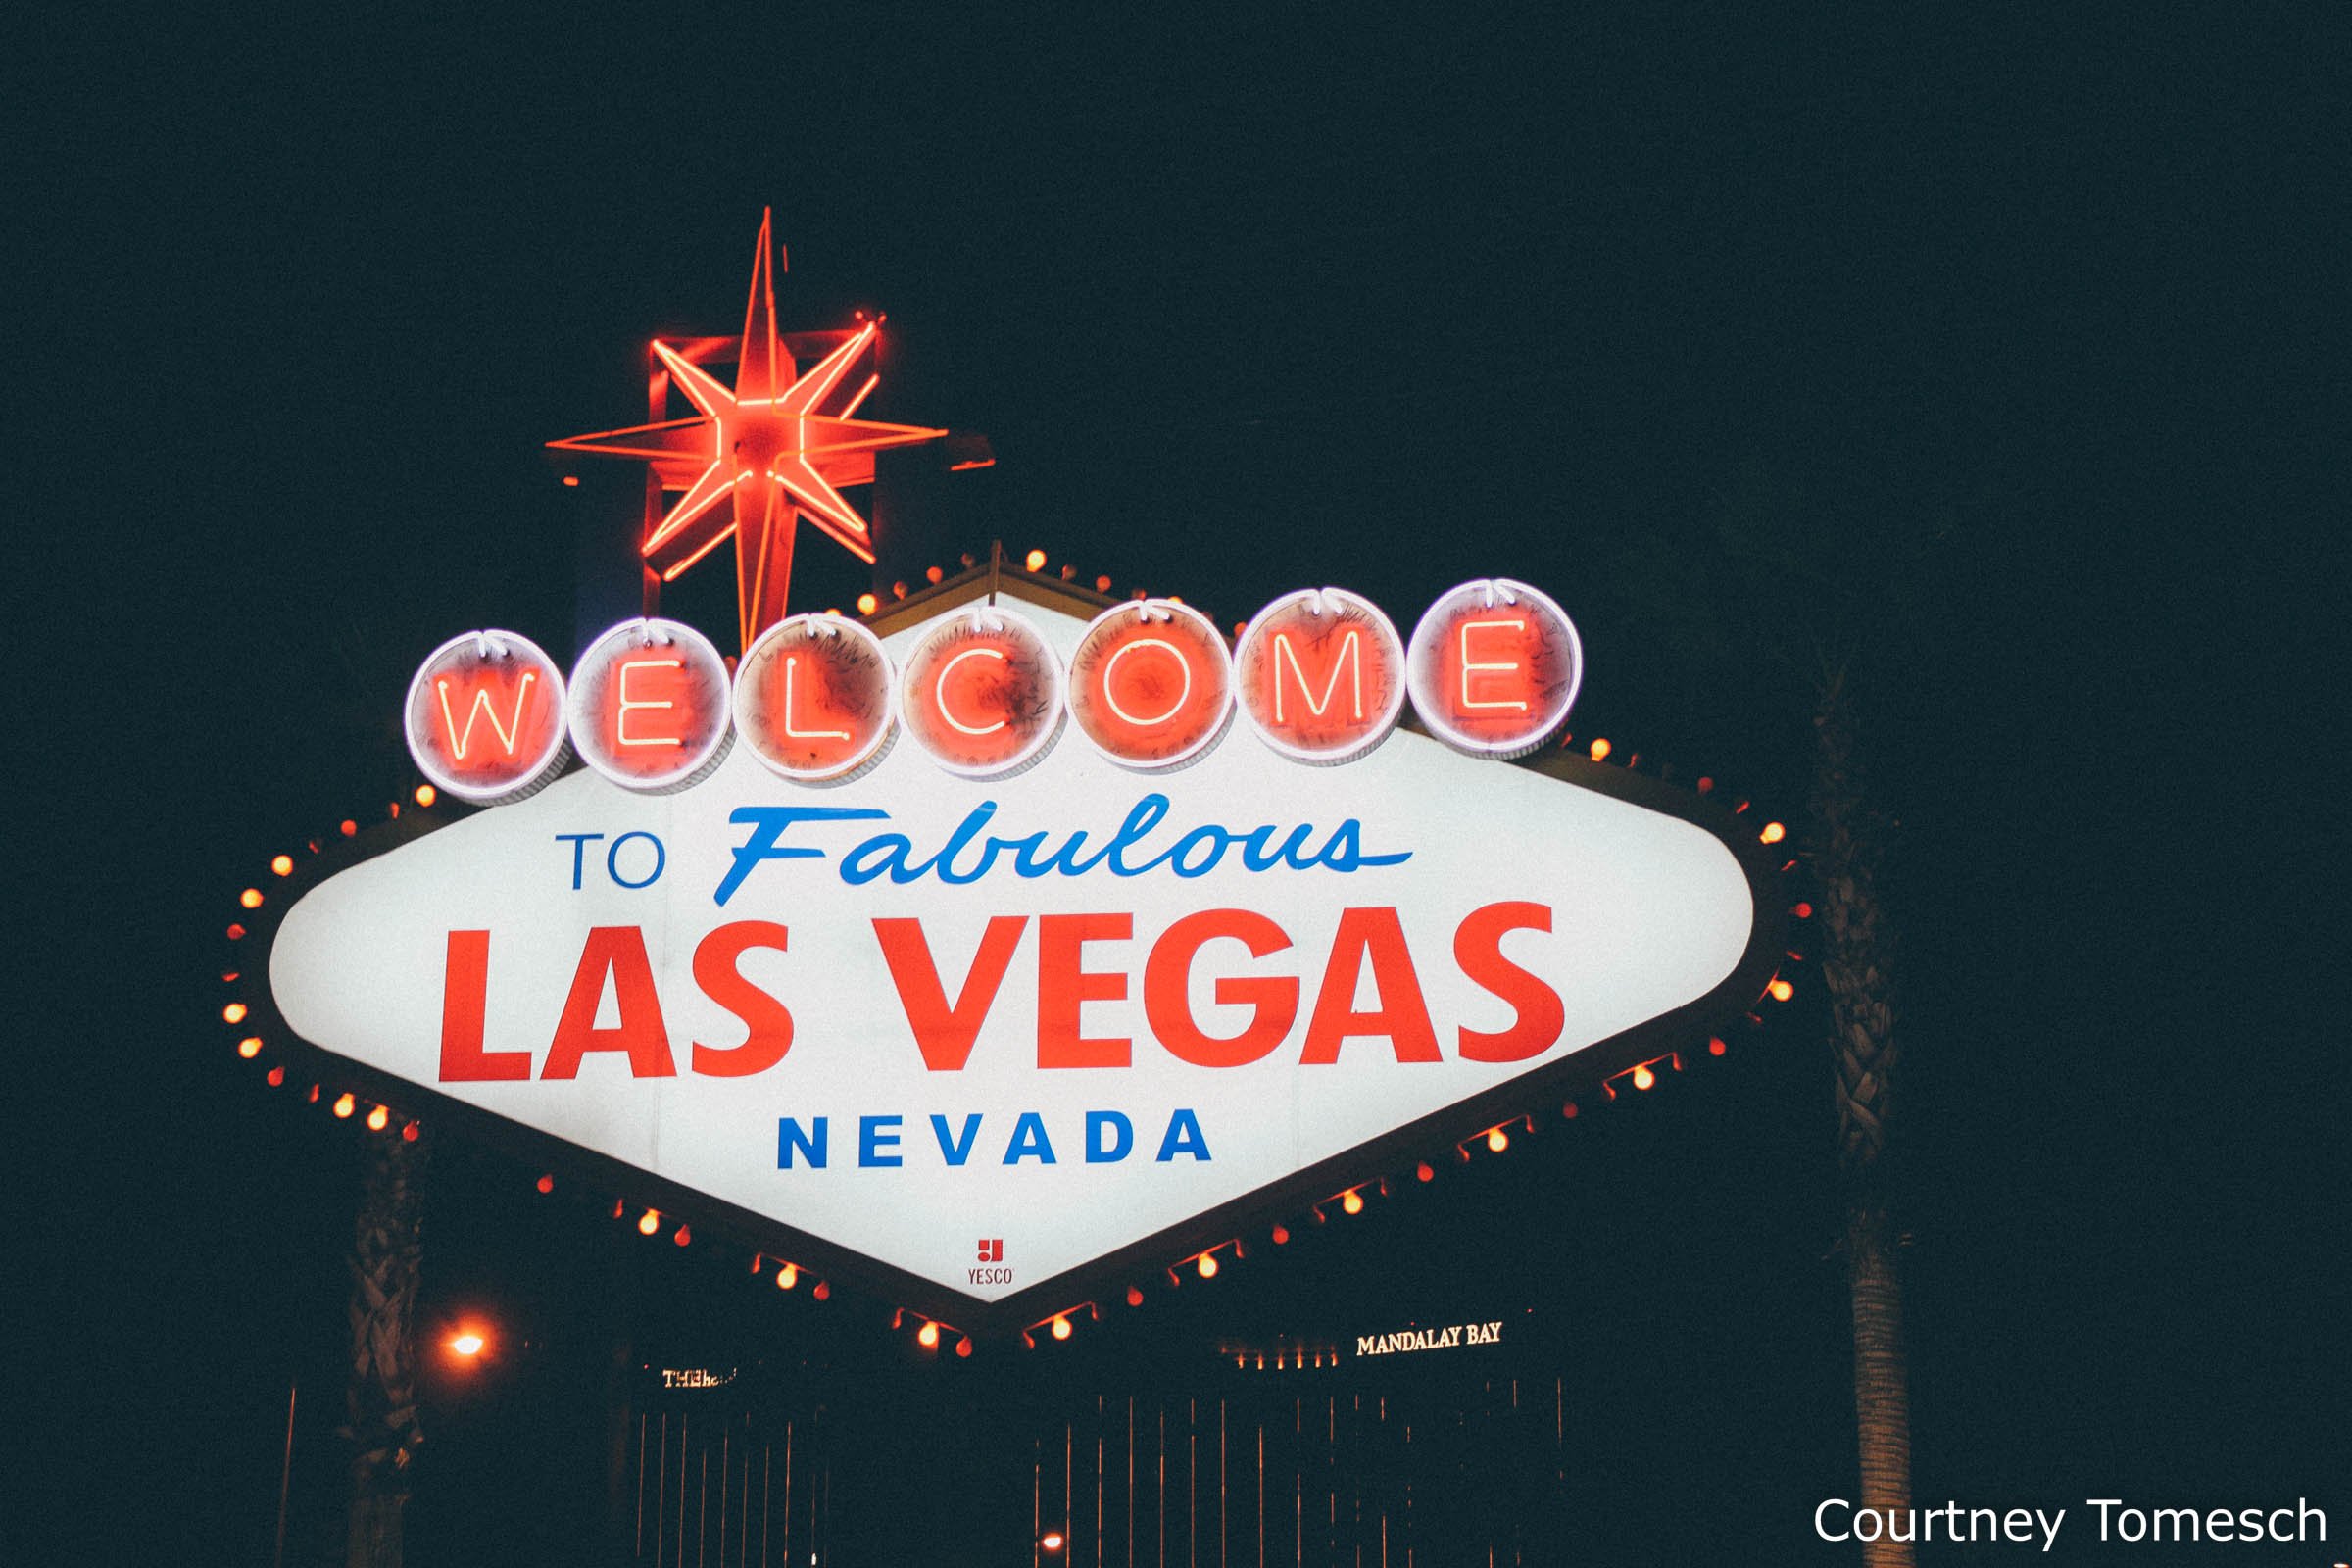  The Las Vegas sign